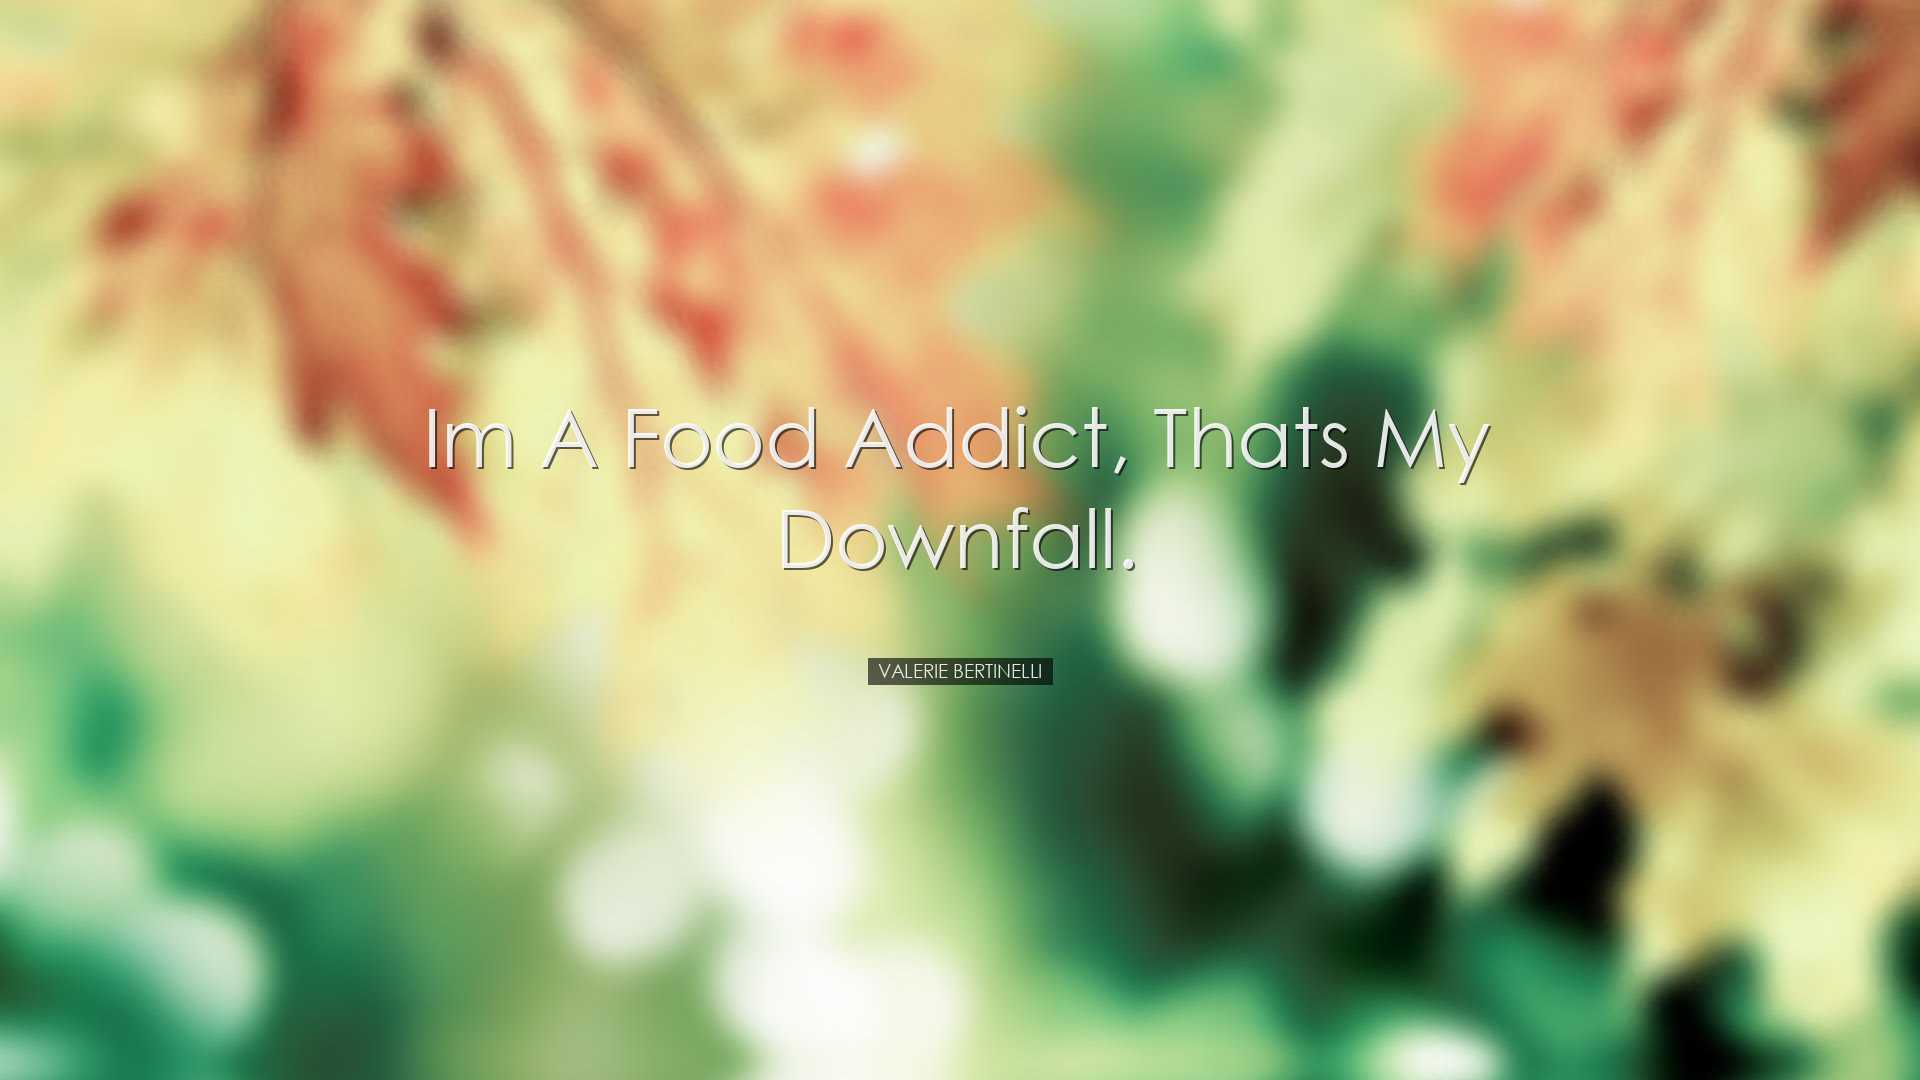 Im a food addict, thats my downfall. - Valerie Bertinelli